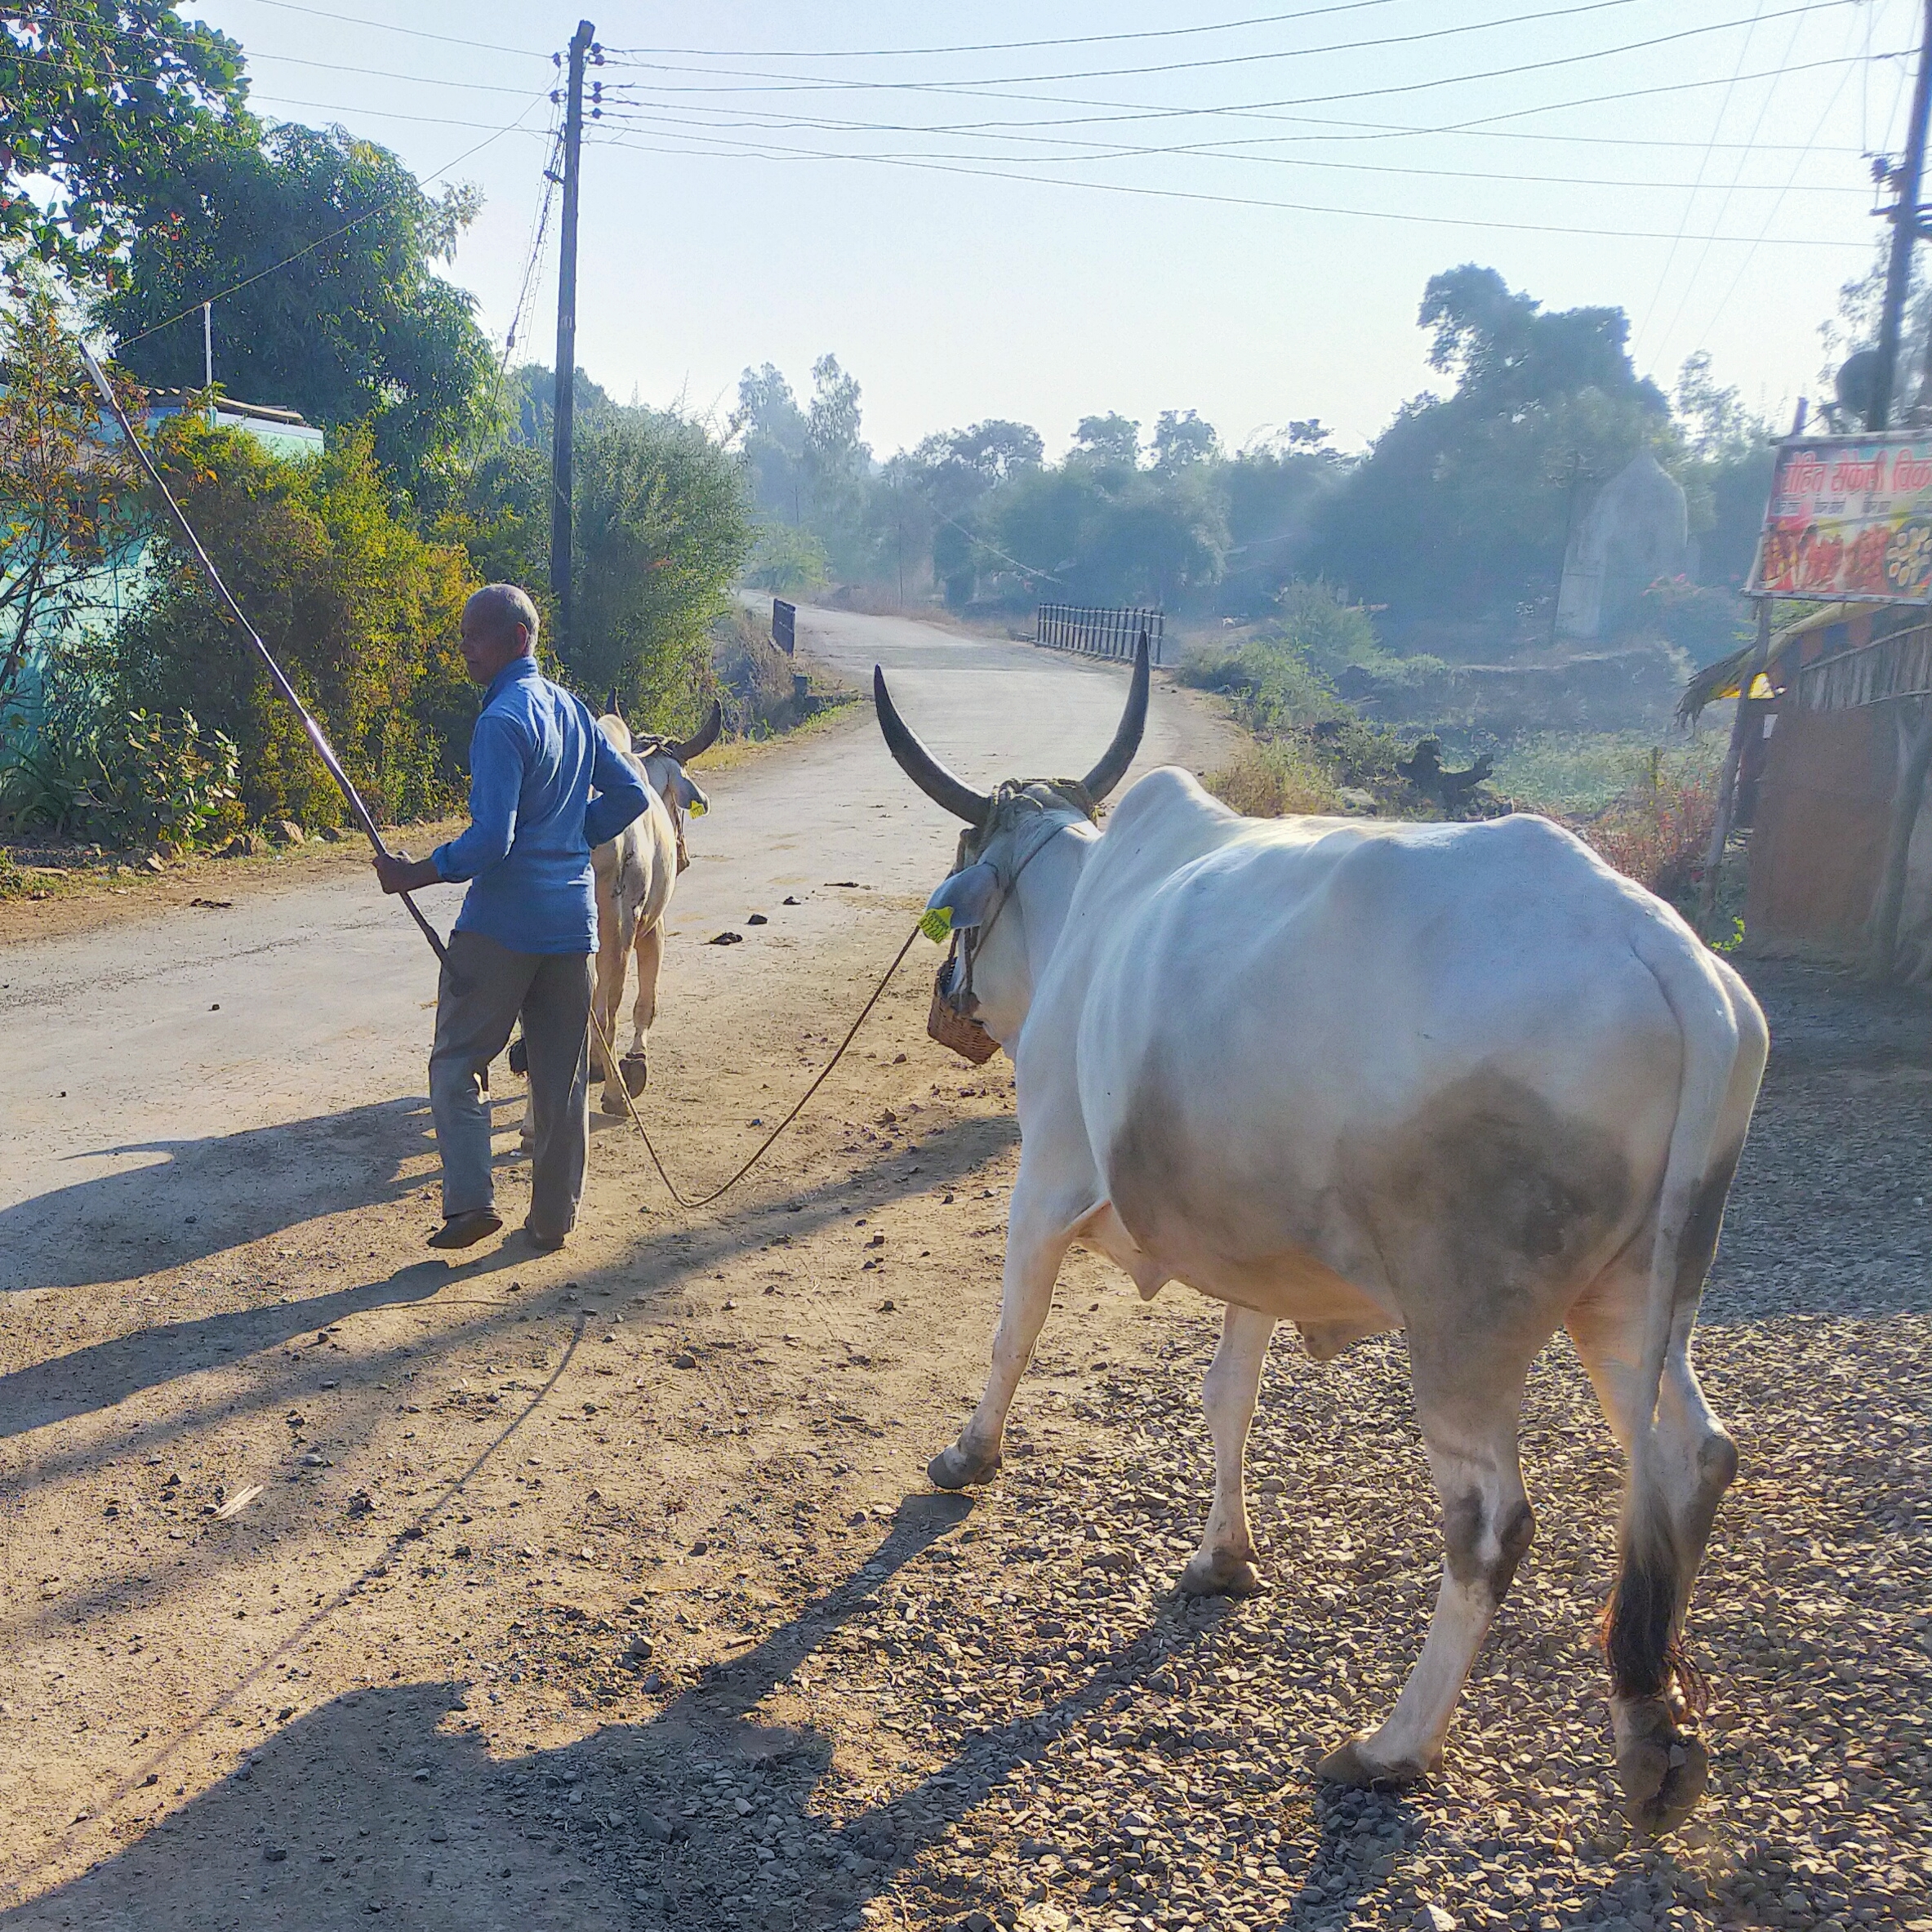 A farmer with his oxen